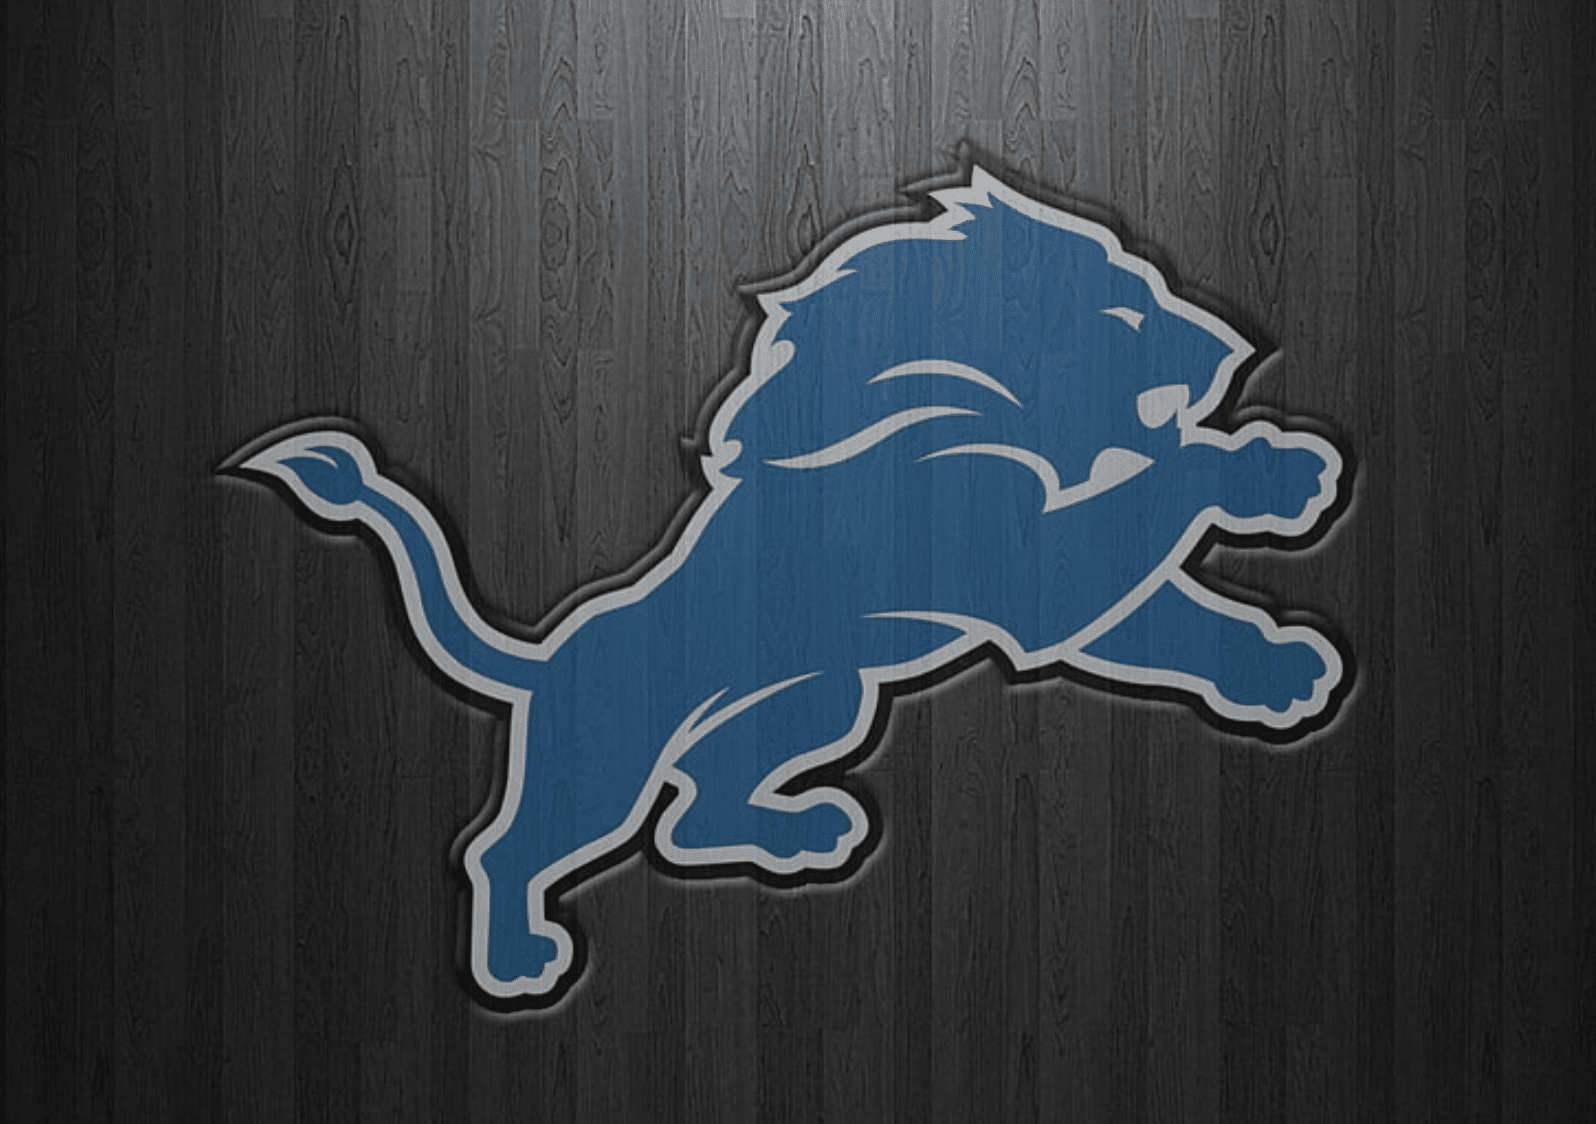 Detroit Lions 2023 NFL Power Rankings 2023 NFL Mock Draft NFL Hall of Fame Gould Off-season needs Teddy Bridgewater Jake McQuaide Ford Family Roschon Johnson Drew Brees